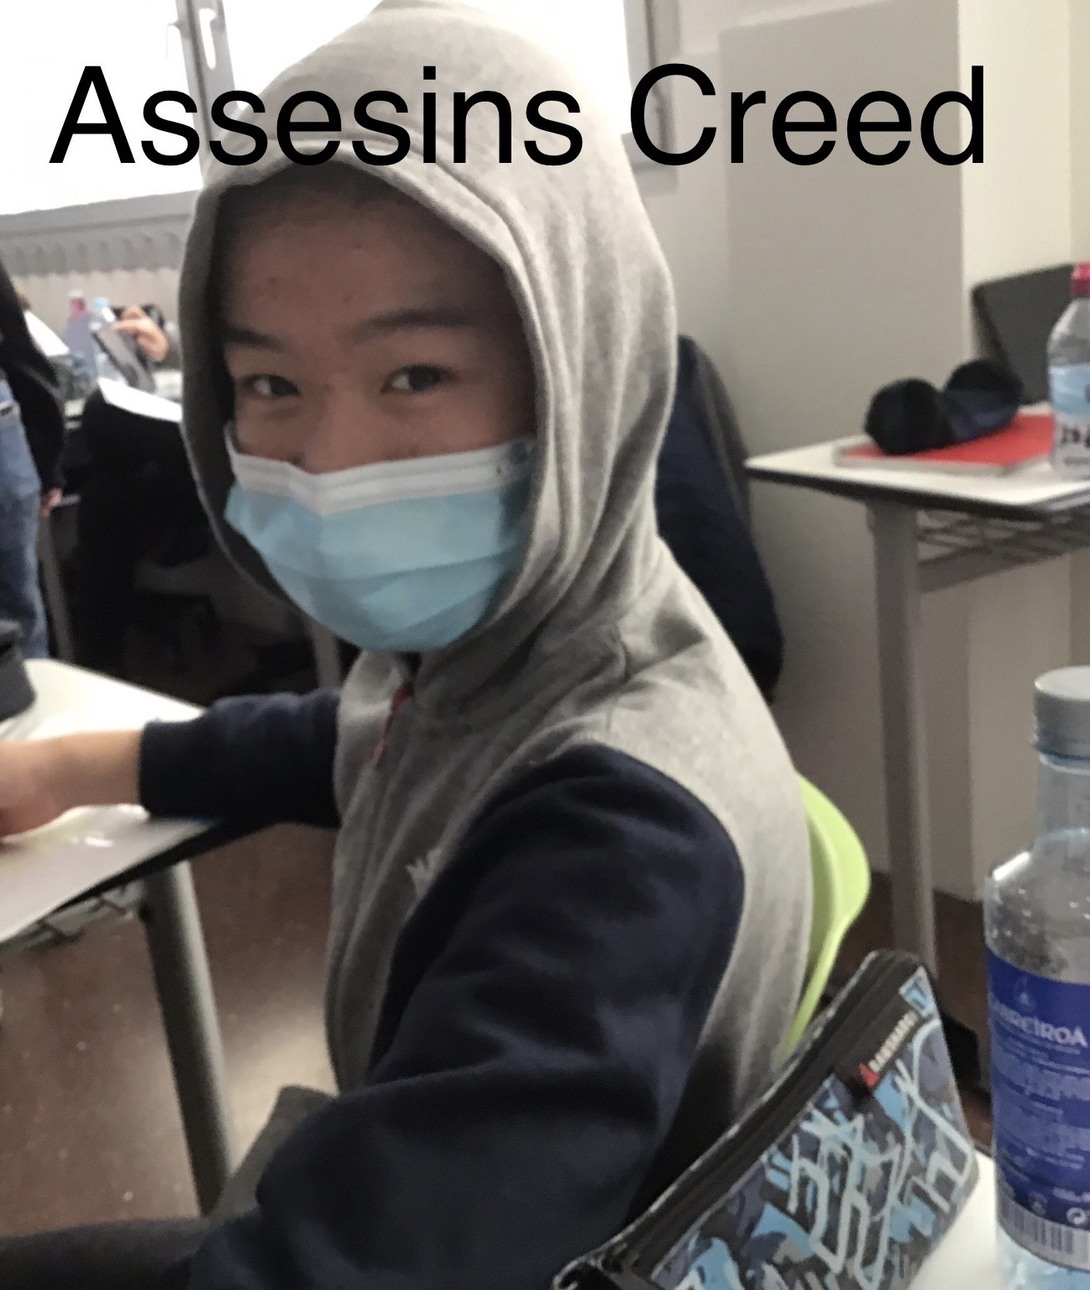 Assassins creed - meme